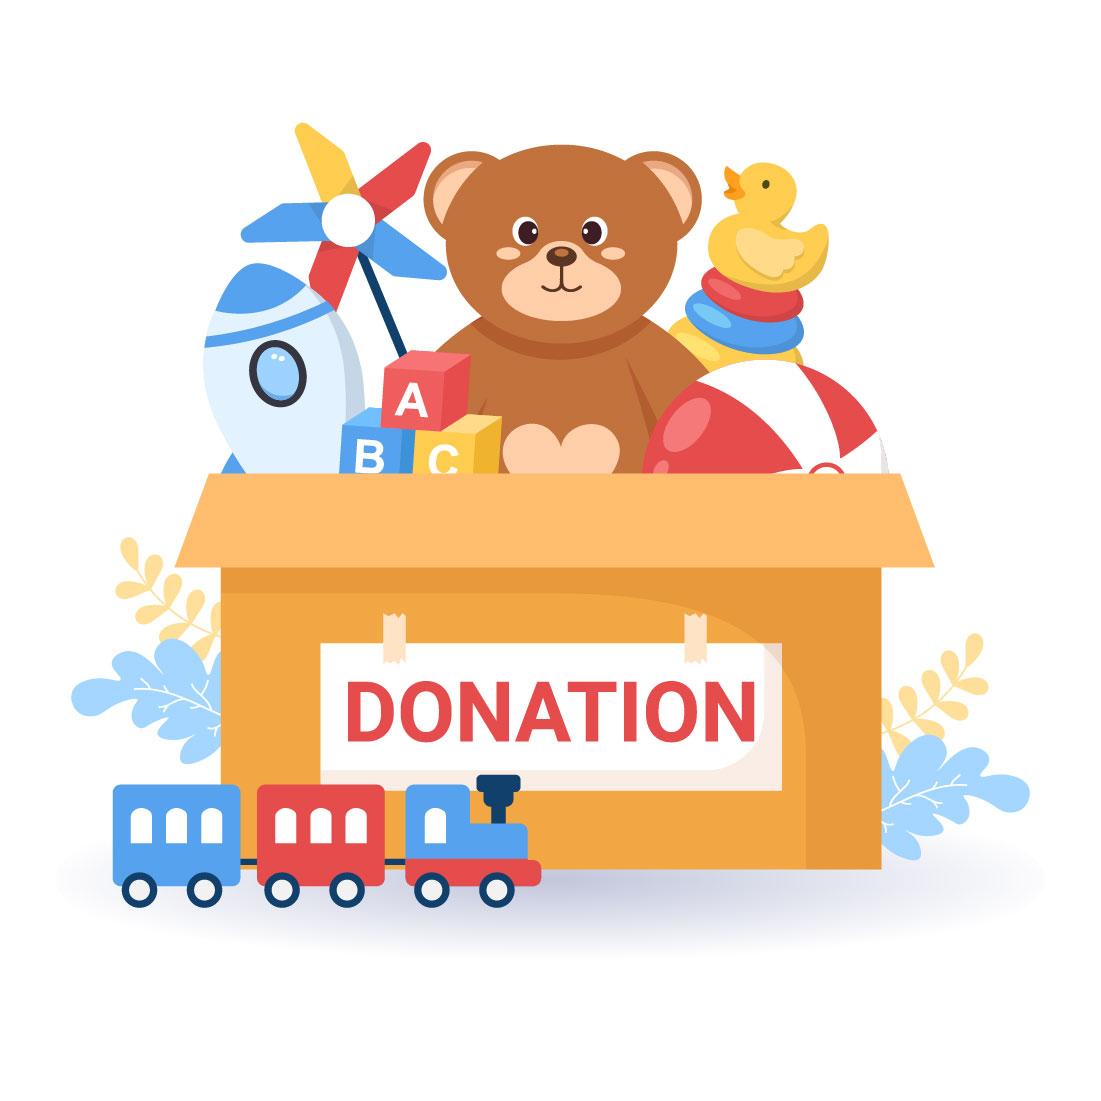 8 Donation Box Toys for Children Illustration preview image.